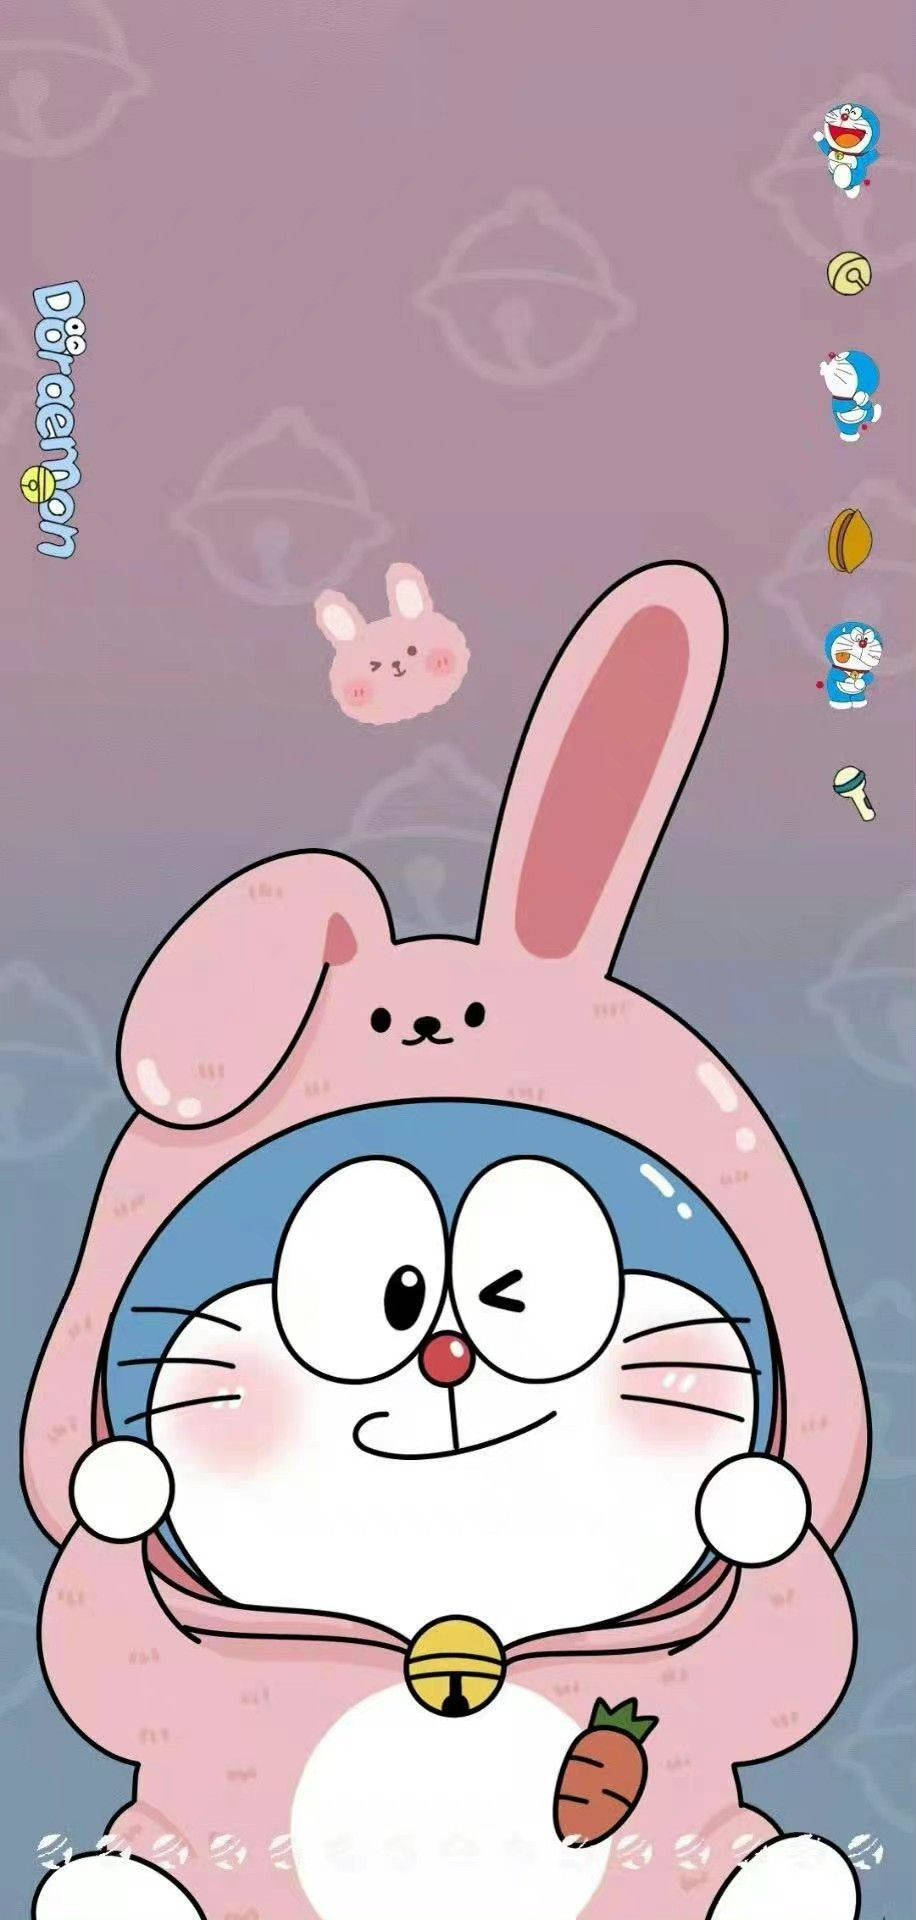 Free Doraemon Iphone Wallpaper Downloads, [100+] Doraemon Iphone Wallpapers  for FREE 